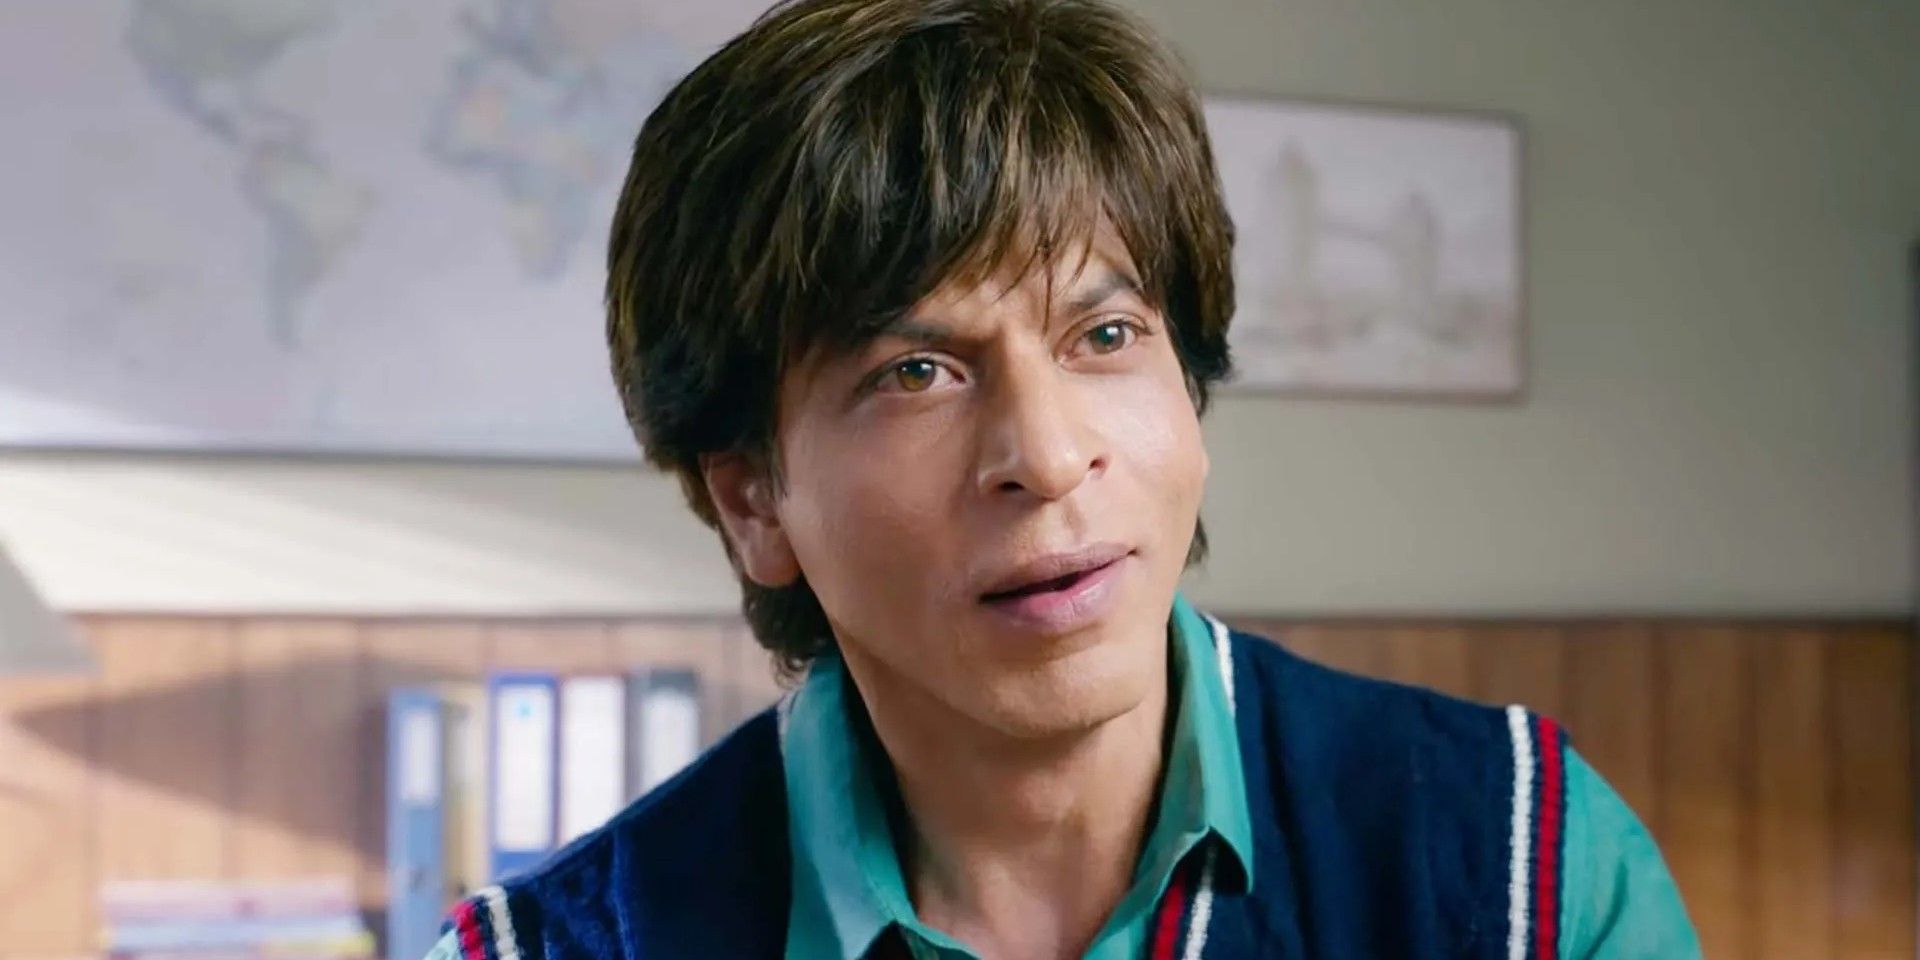 Shah Rukh Khan as Hardy smiling in Dunki